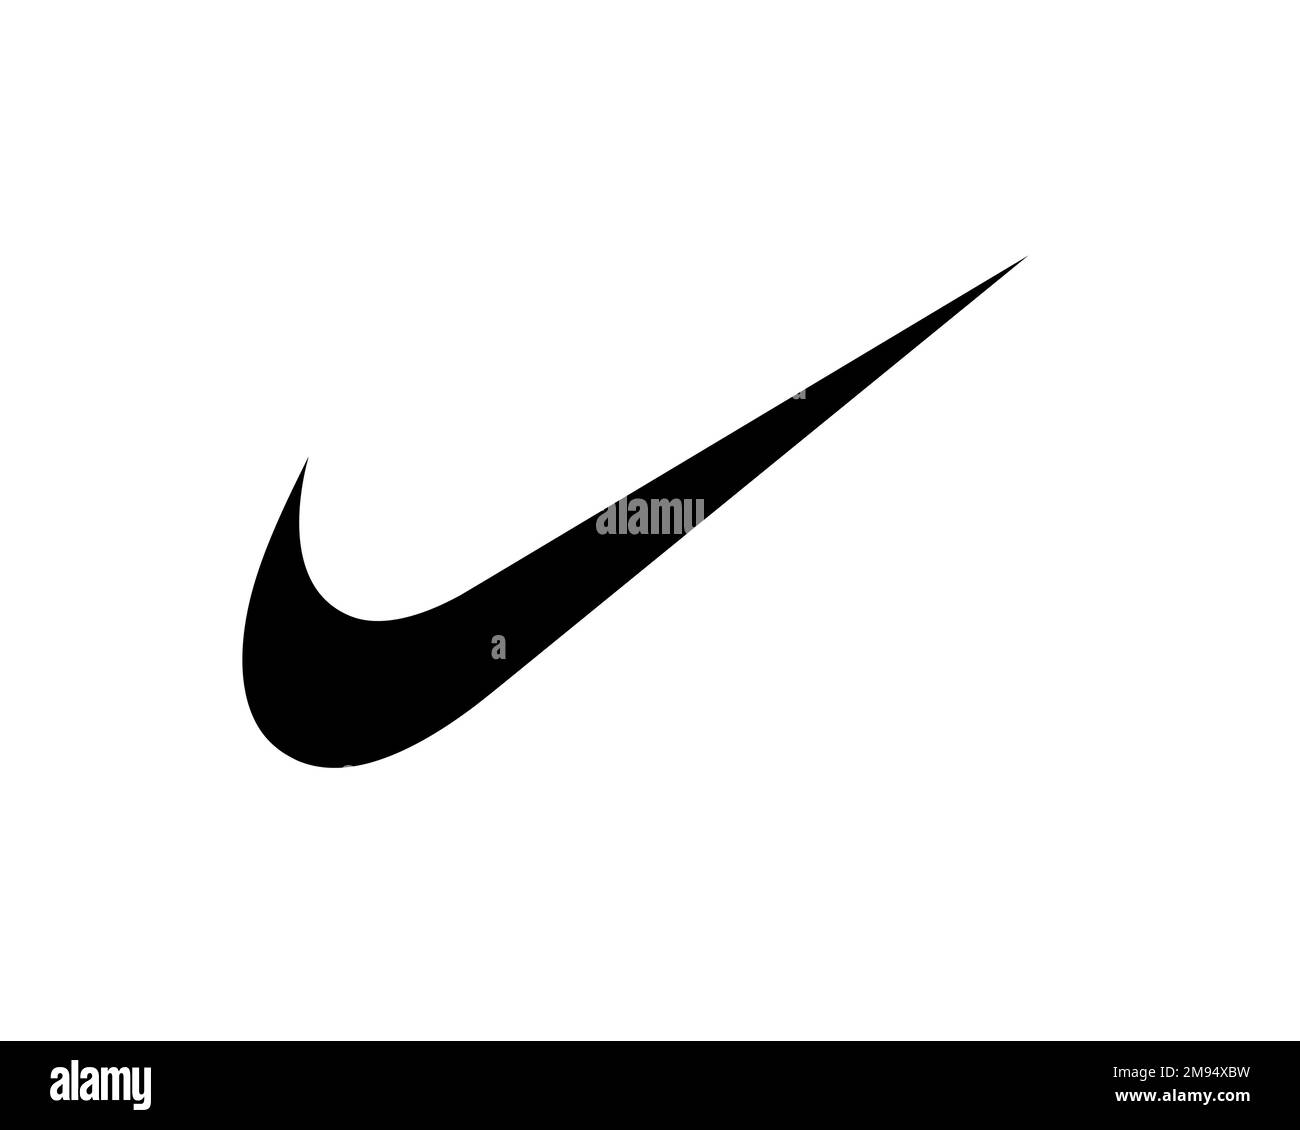 Nike logo Black and White Stock Photos & Images - Alamy